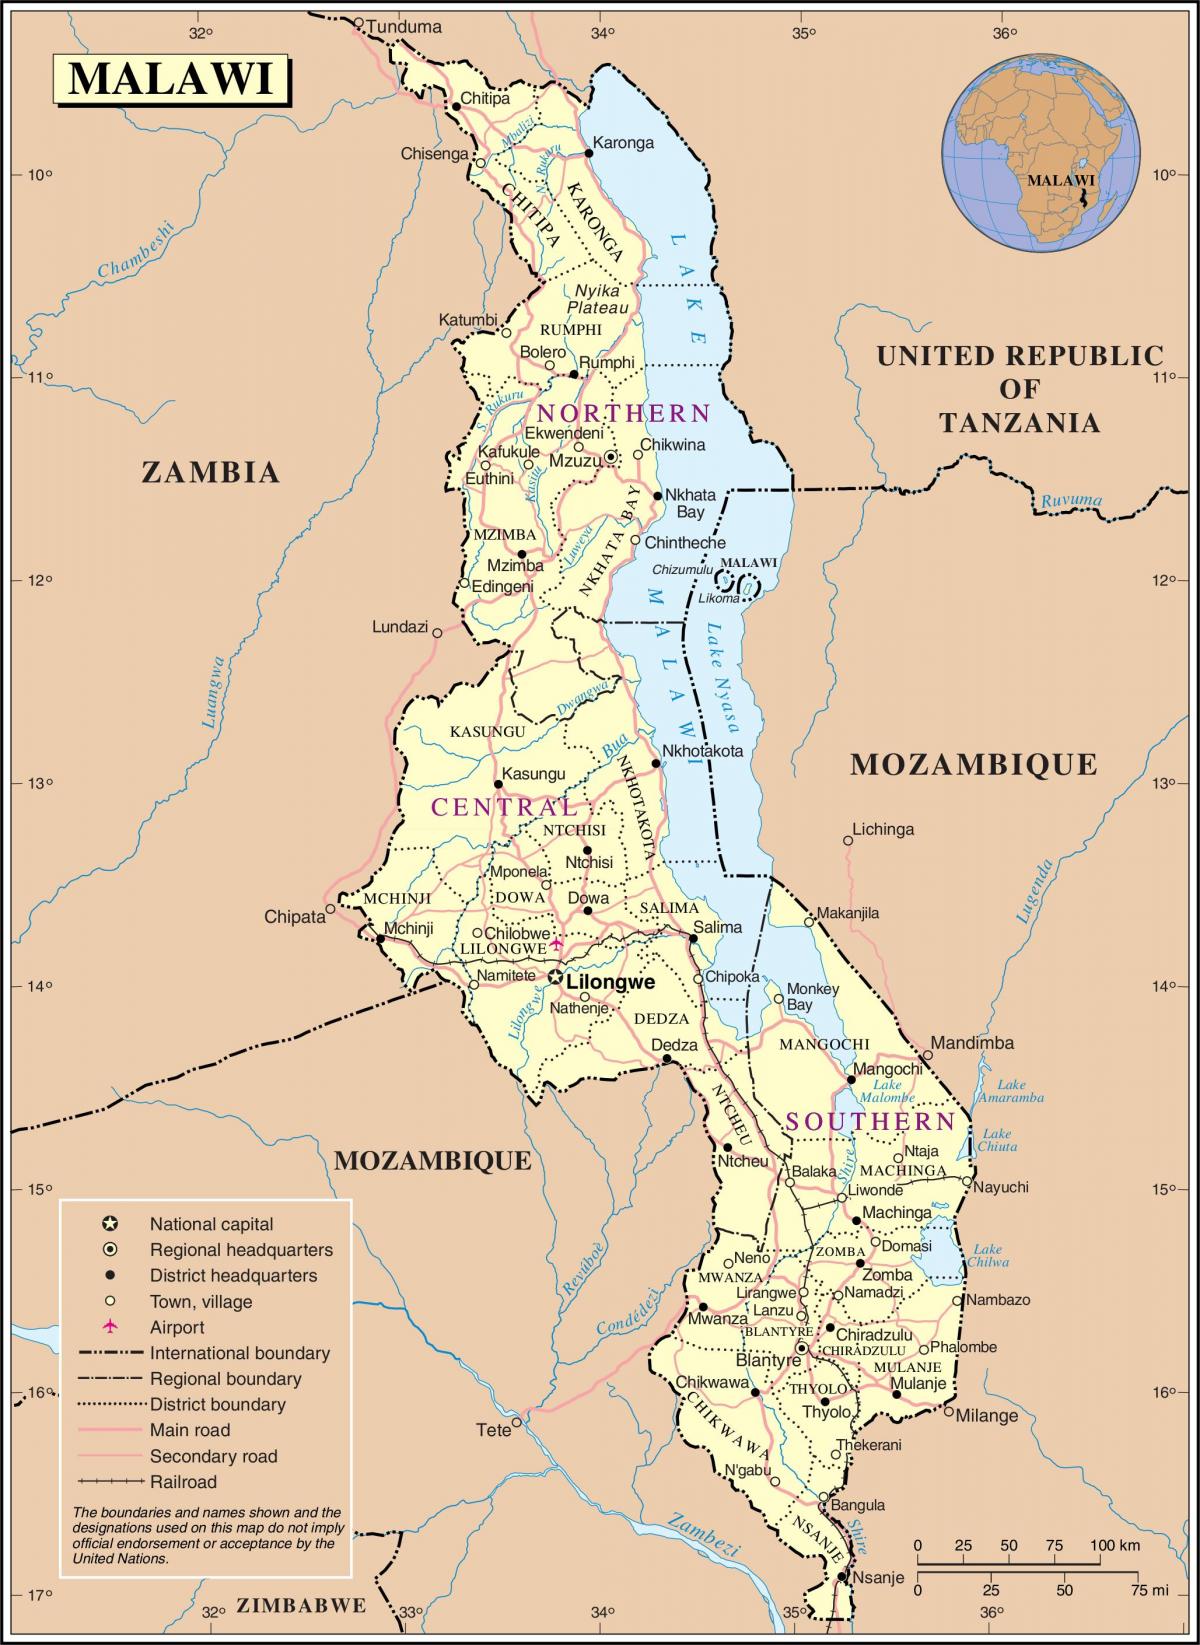 térkép Malawi mutatja utak